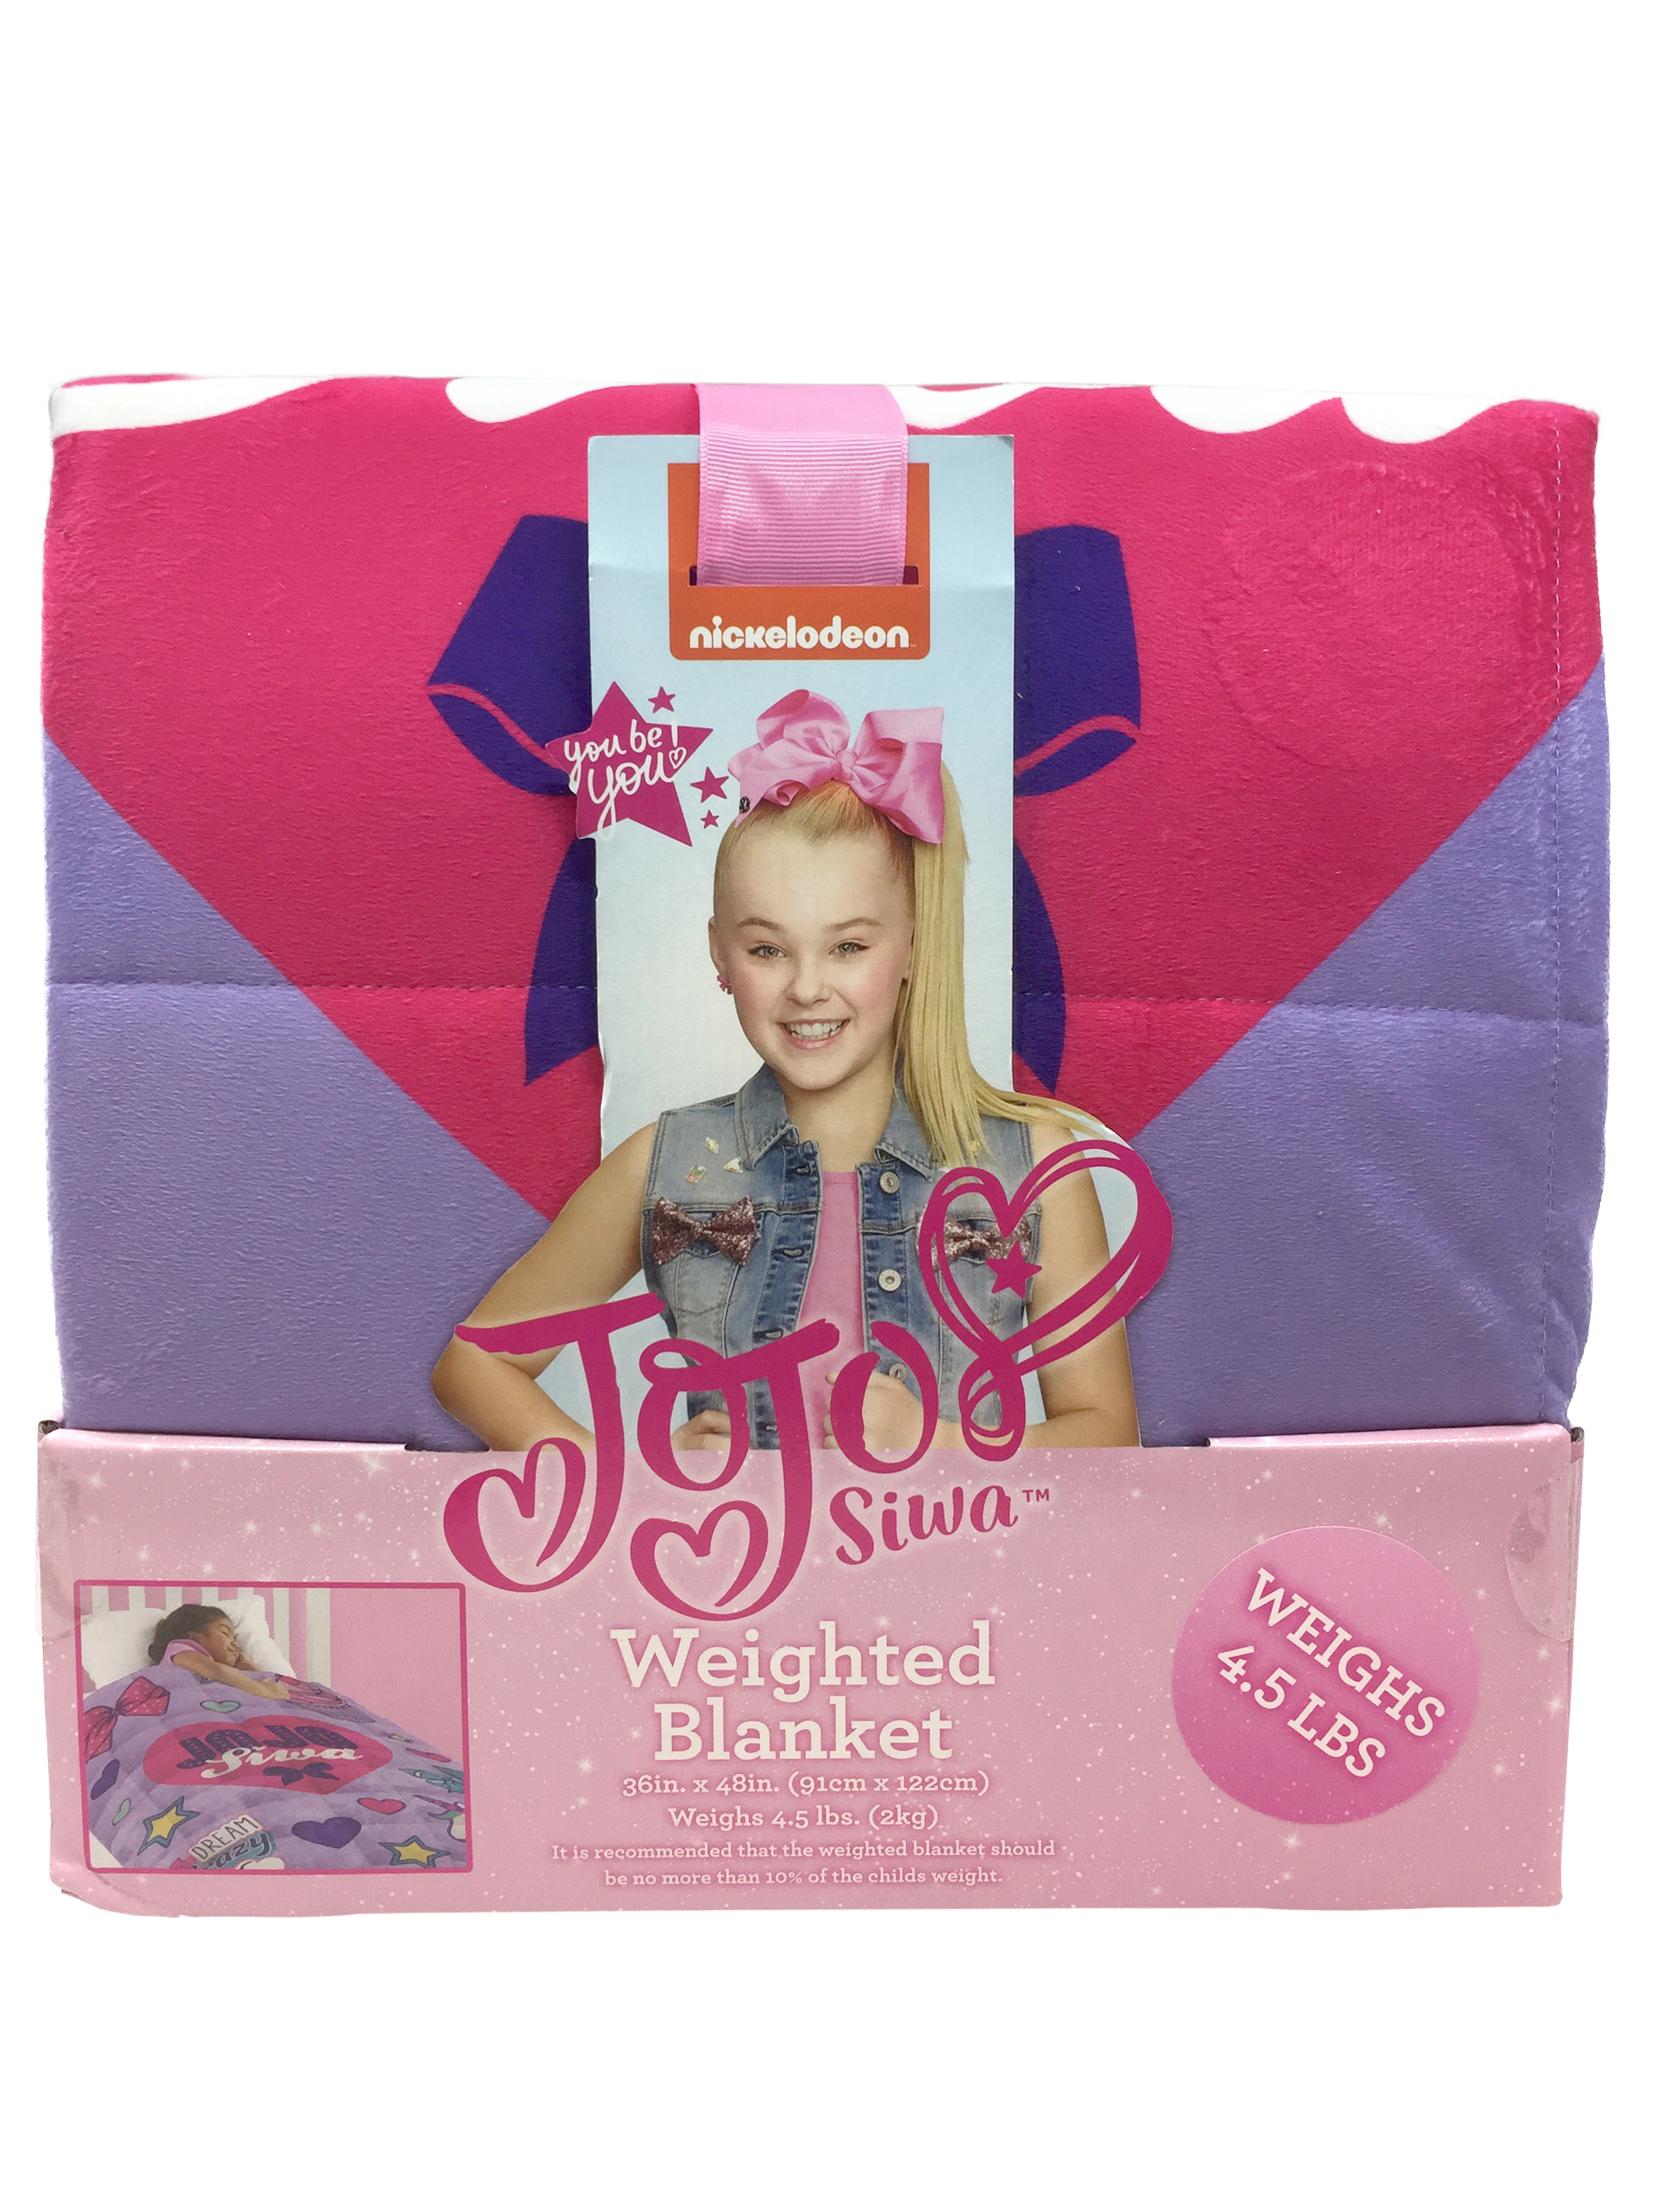 Jojo Siwa Weighted Blanket, 4.5 lb, 36" x 48" - image 3 of 3